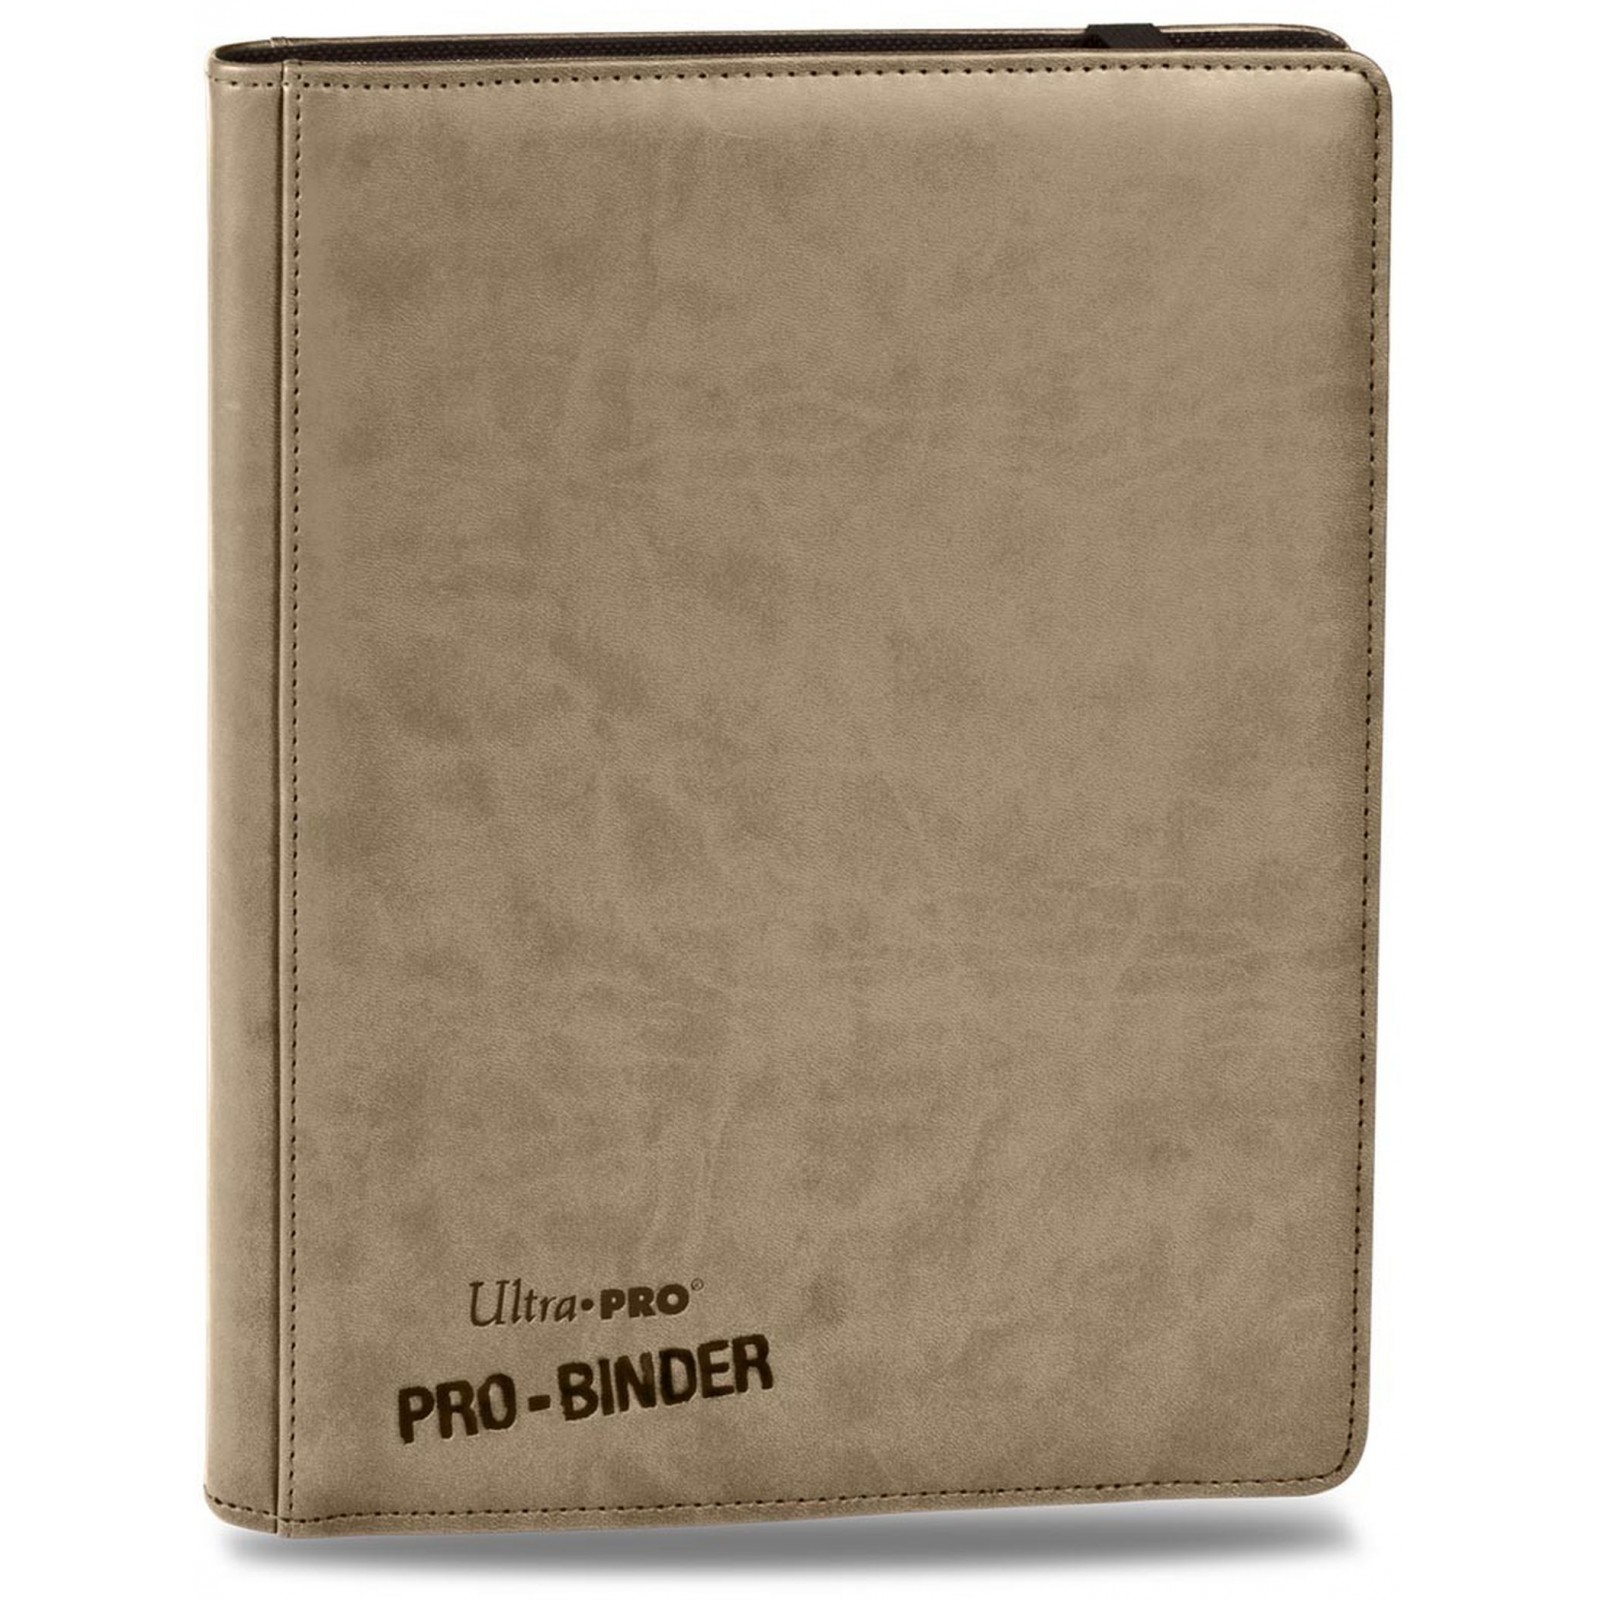 Pro Binder Premium - 9 Cases / 360 Emplacements - Blanc